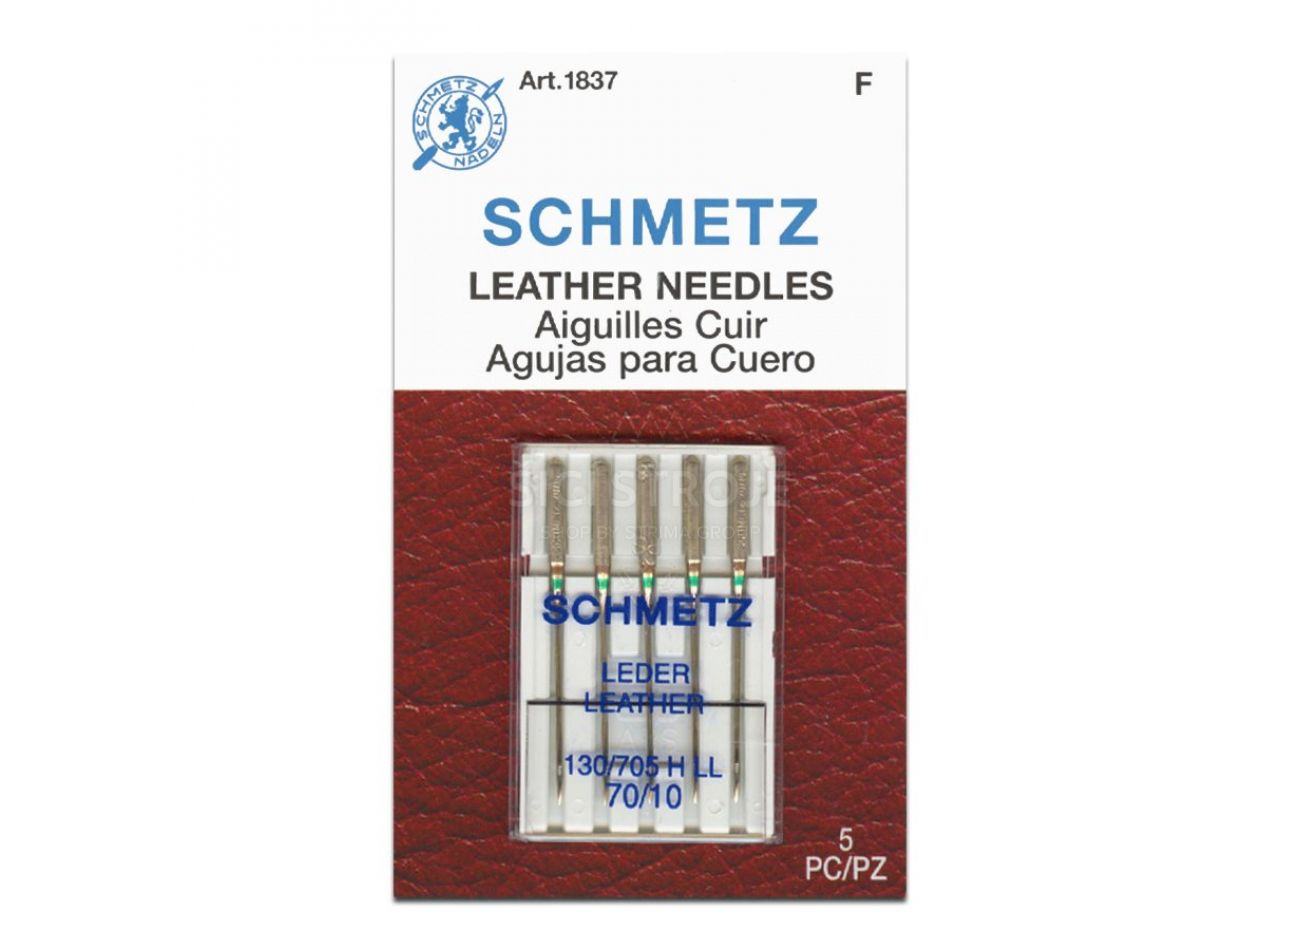 Schmetz ihly na kožu 130/705 H LL VBS 70